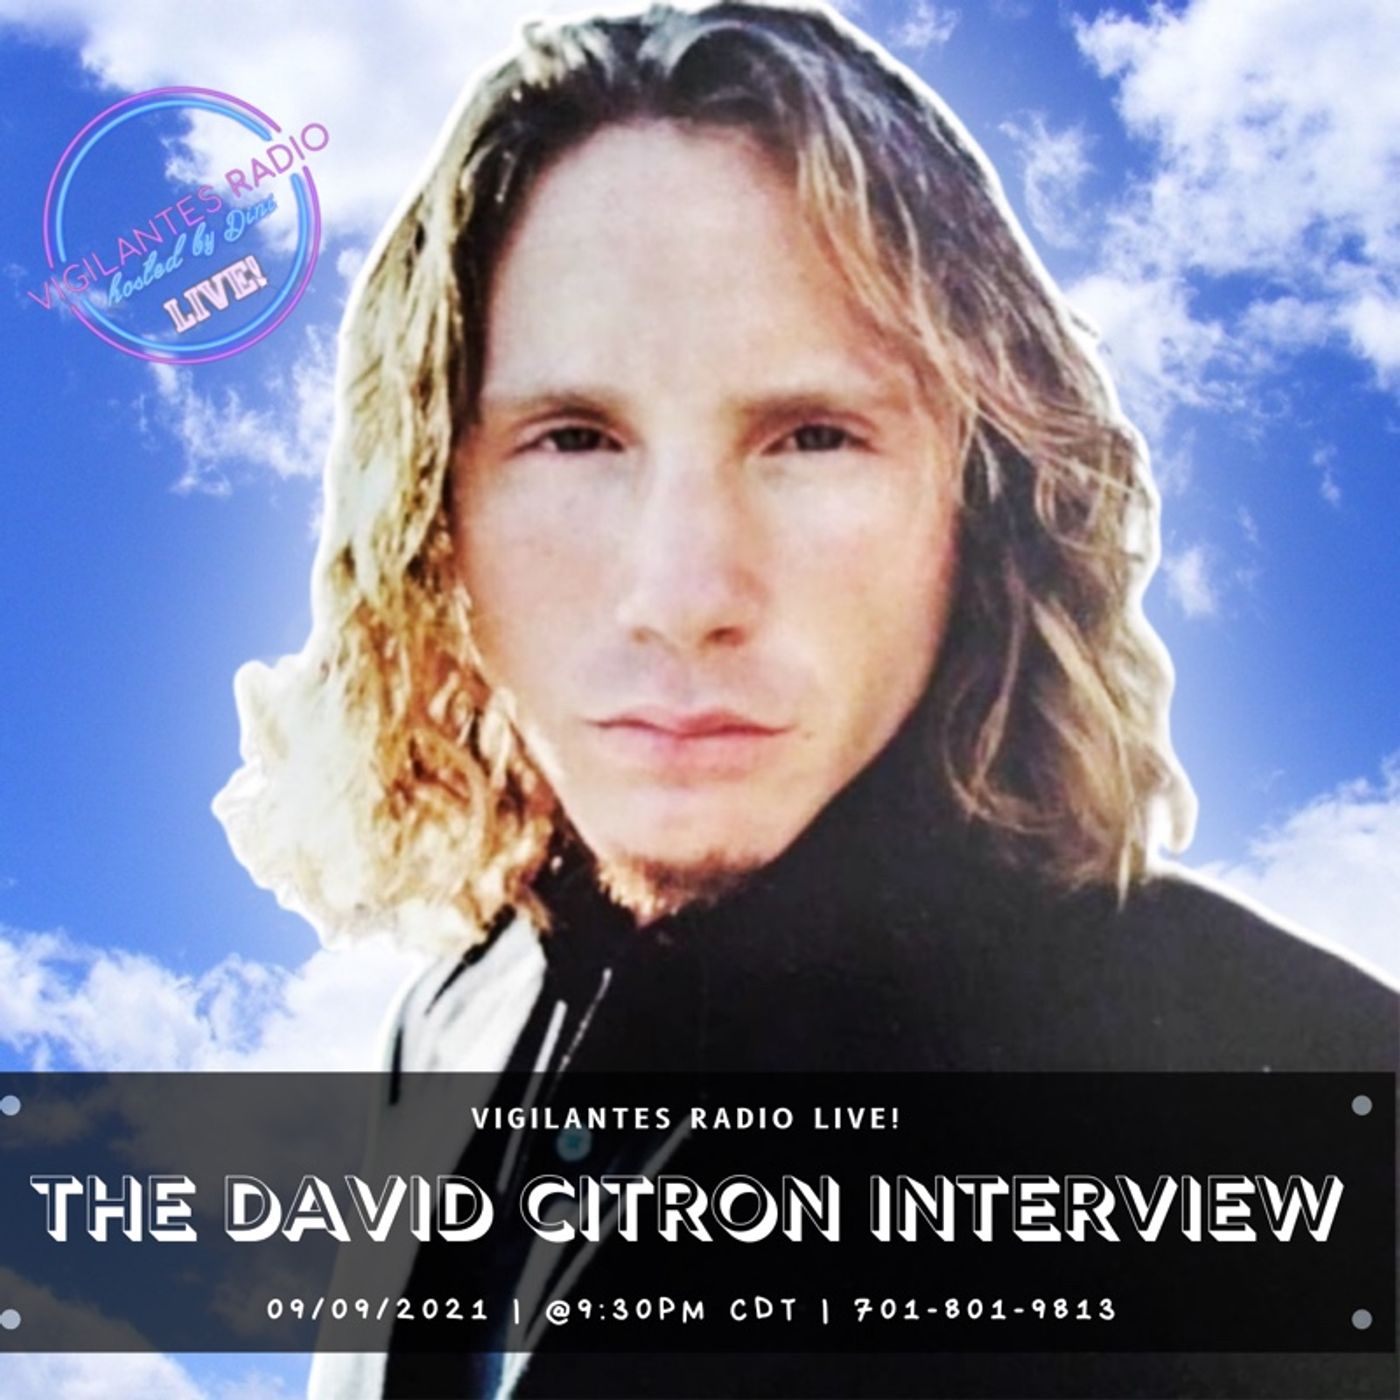 The David Citron Interview. Image